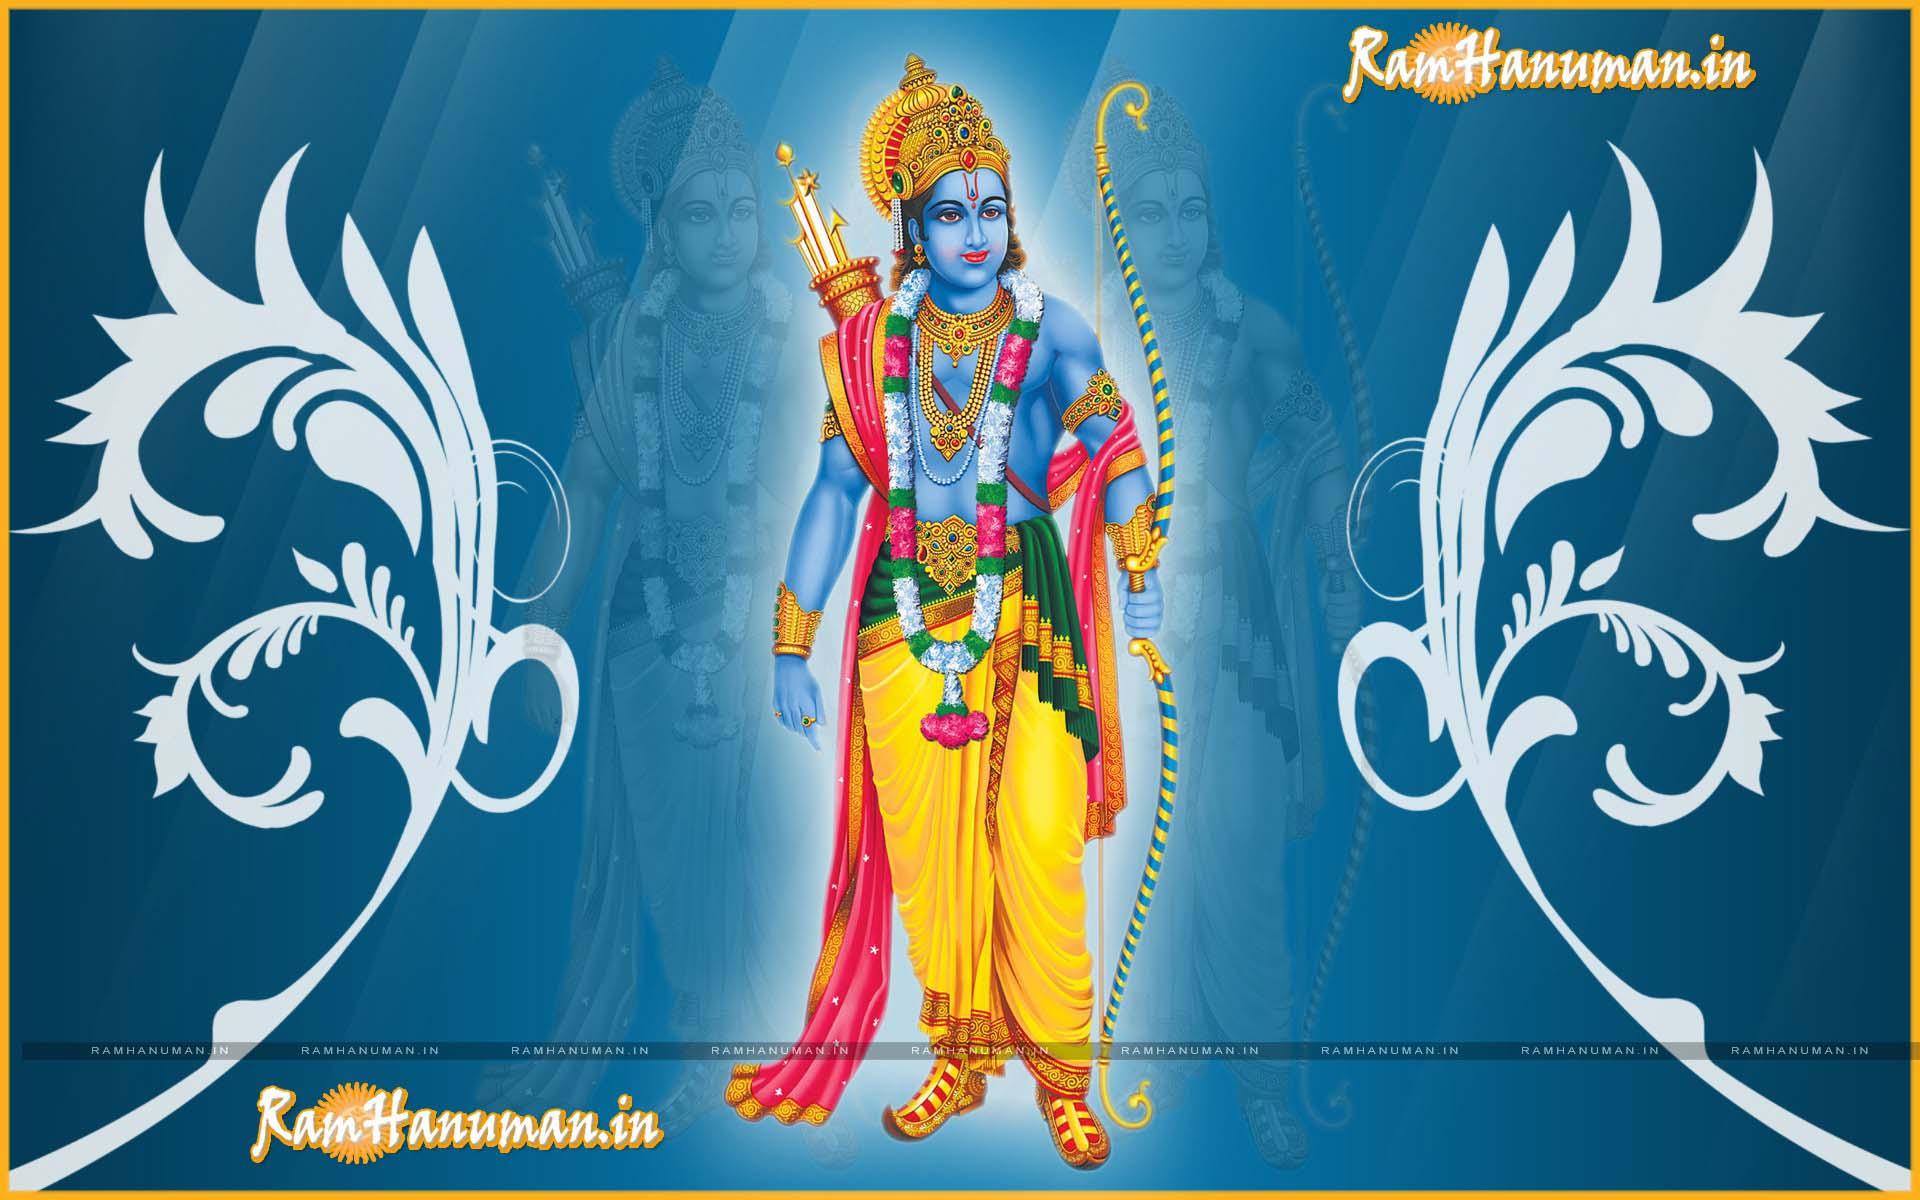 Best Shri Ram ji wallpaper HD Free Download in High Quality